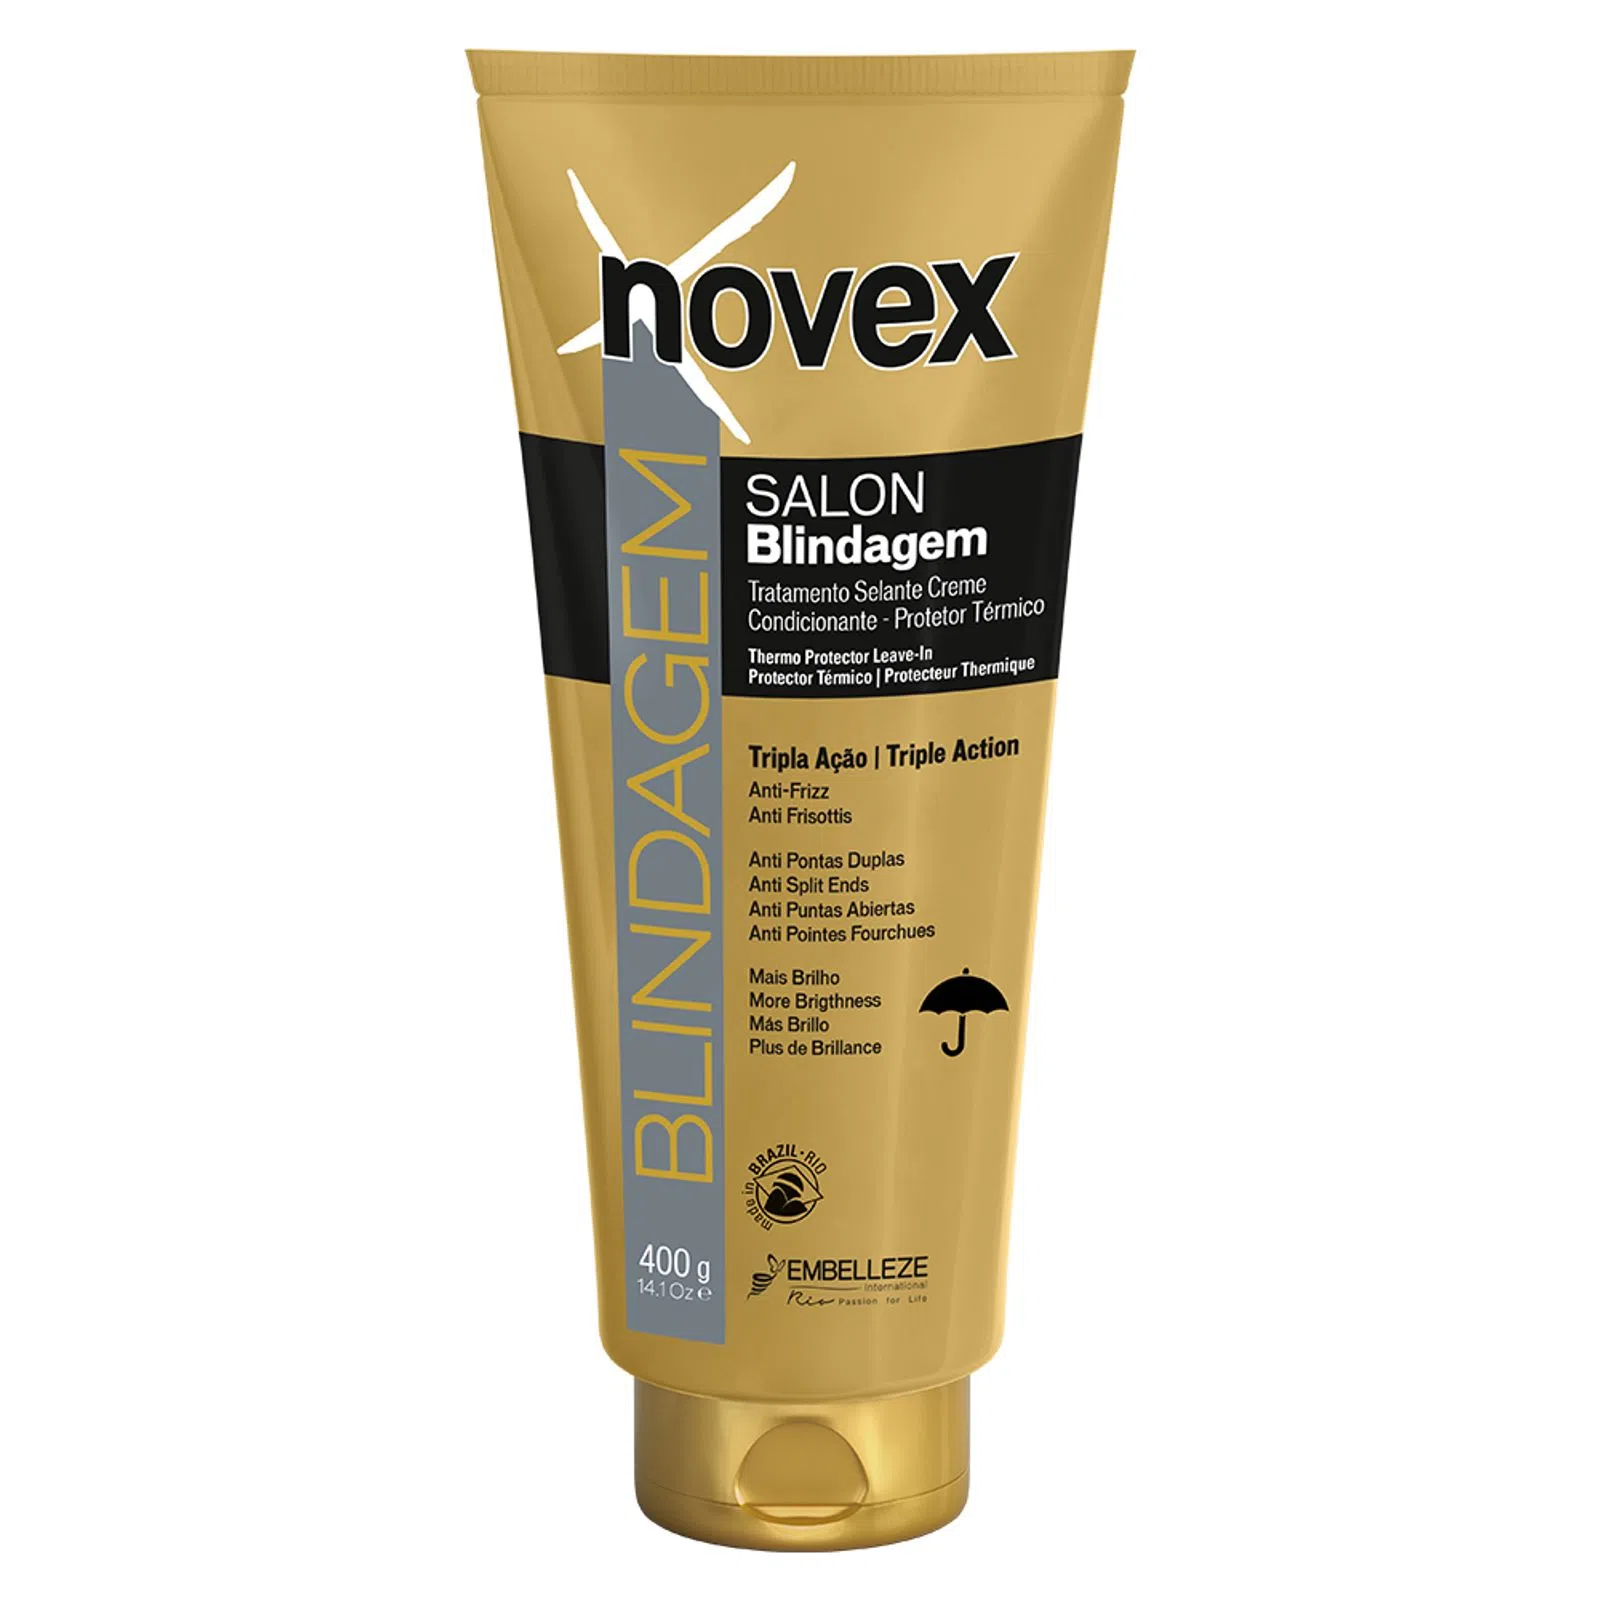 NOVEX Blindagem Leave-in Behandlungscreme - Creme de Tratamento Protetor Térmico, 400g